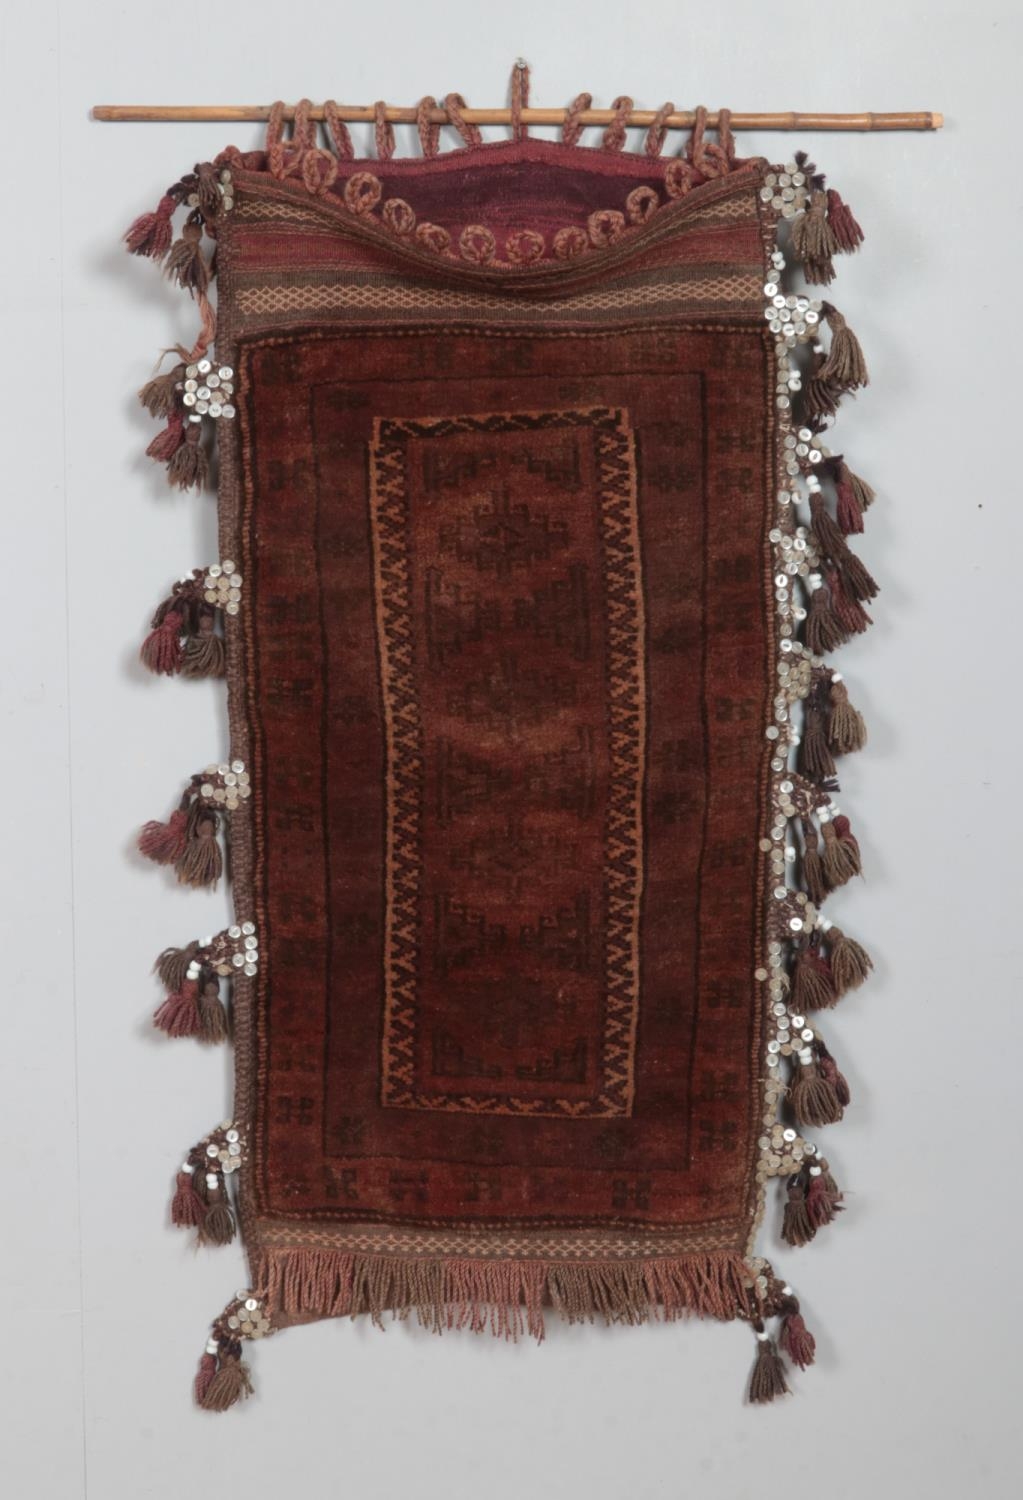 An antique Eastern saddle bag rug, with frilled and tasseled edge. Length: 112cm, Width: 55cm